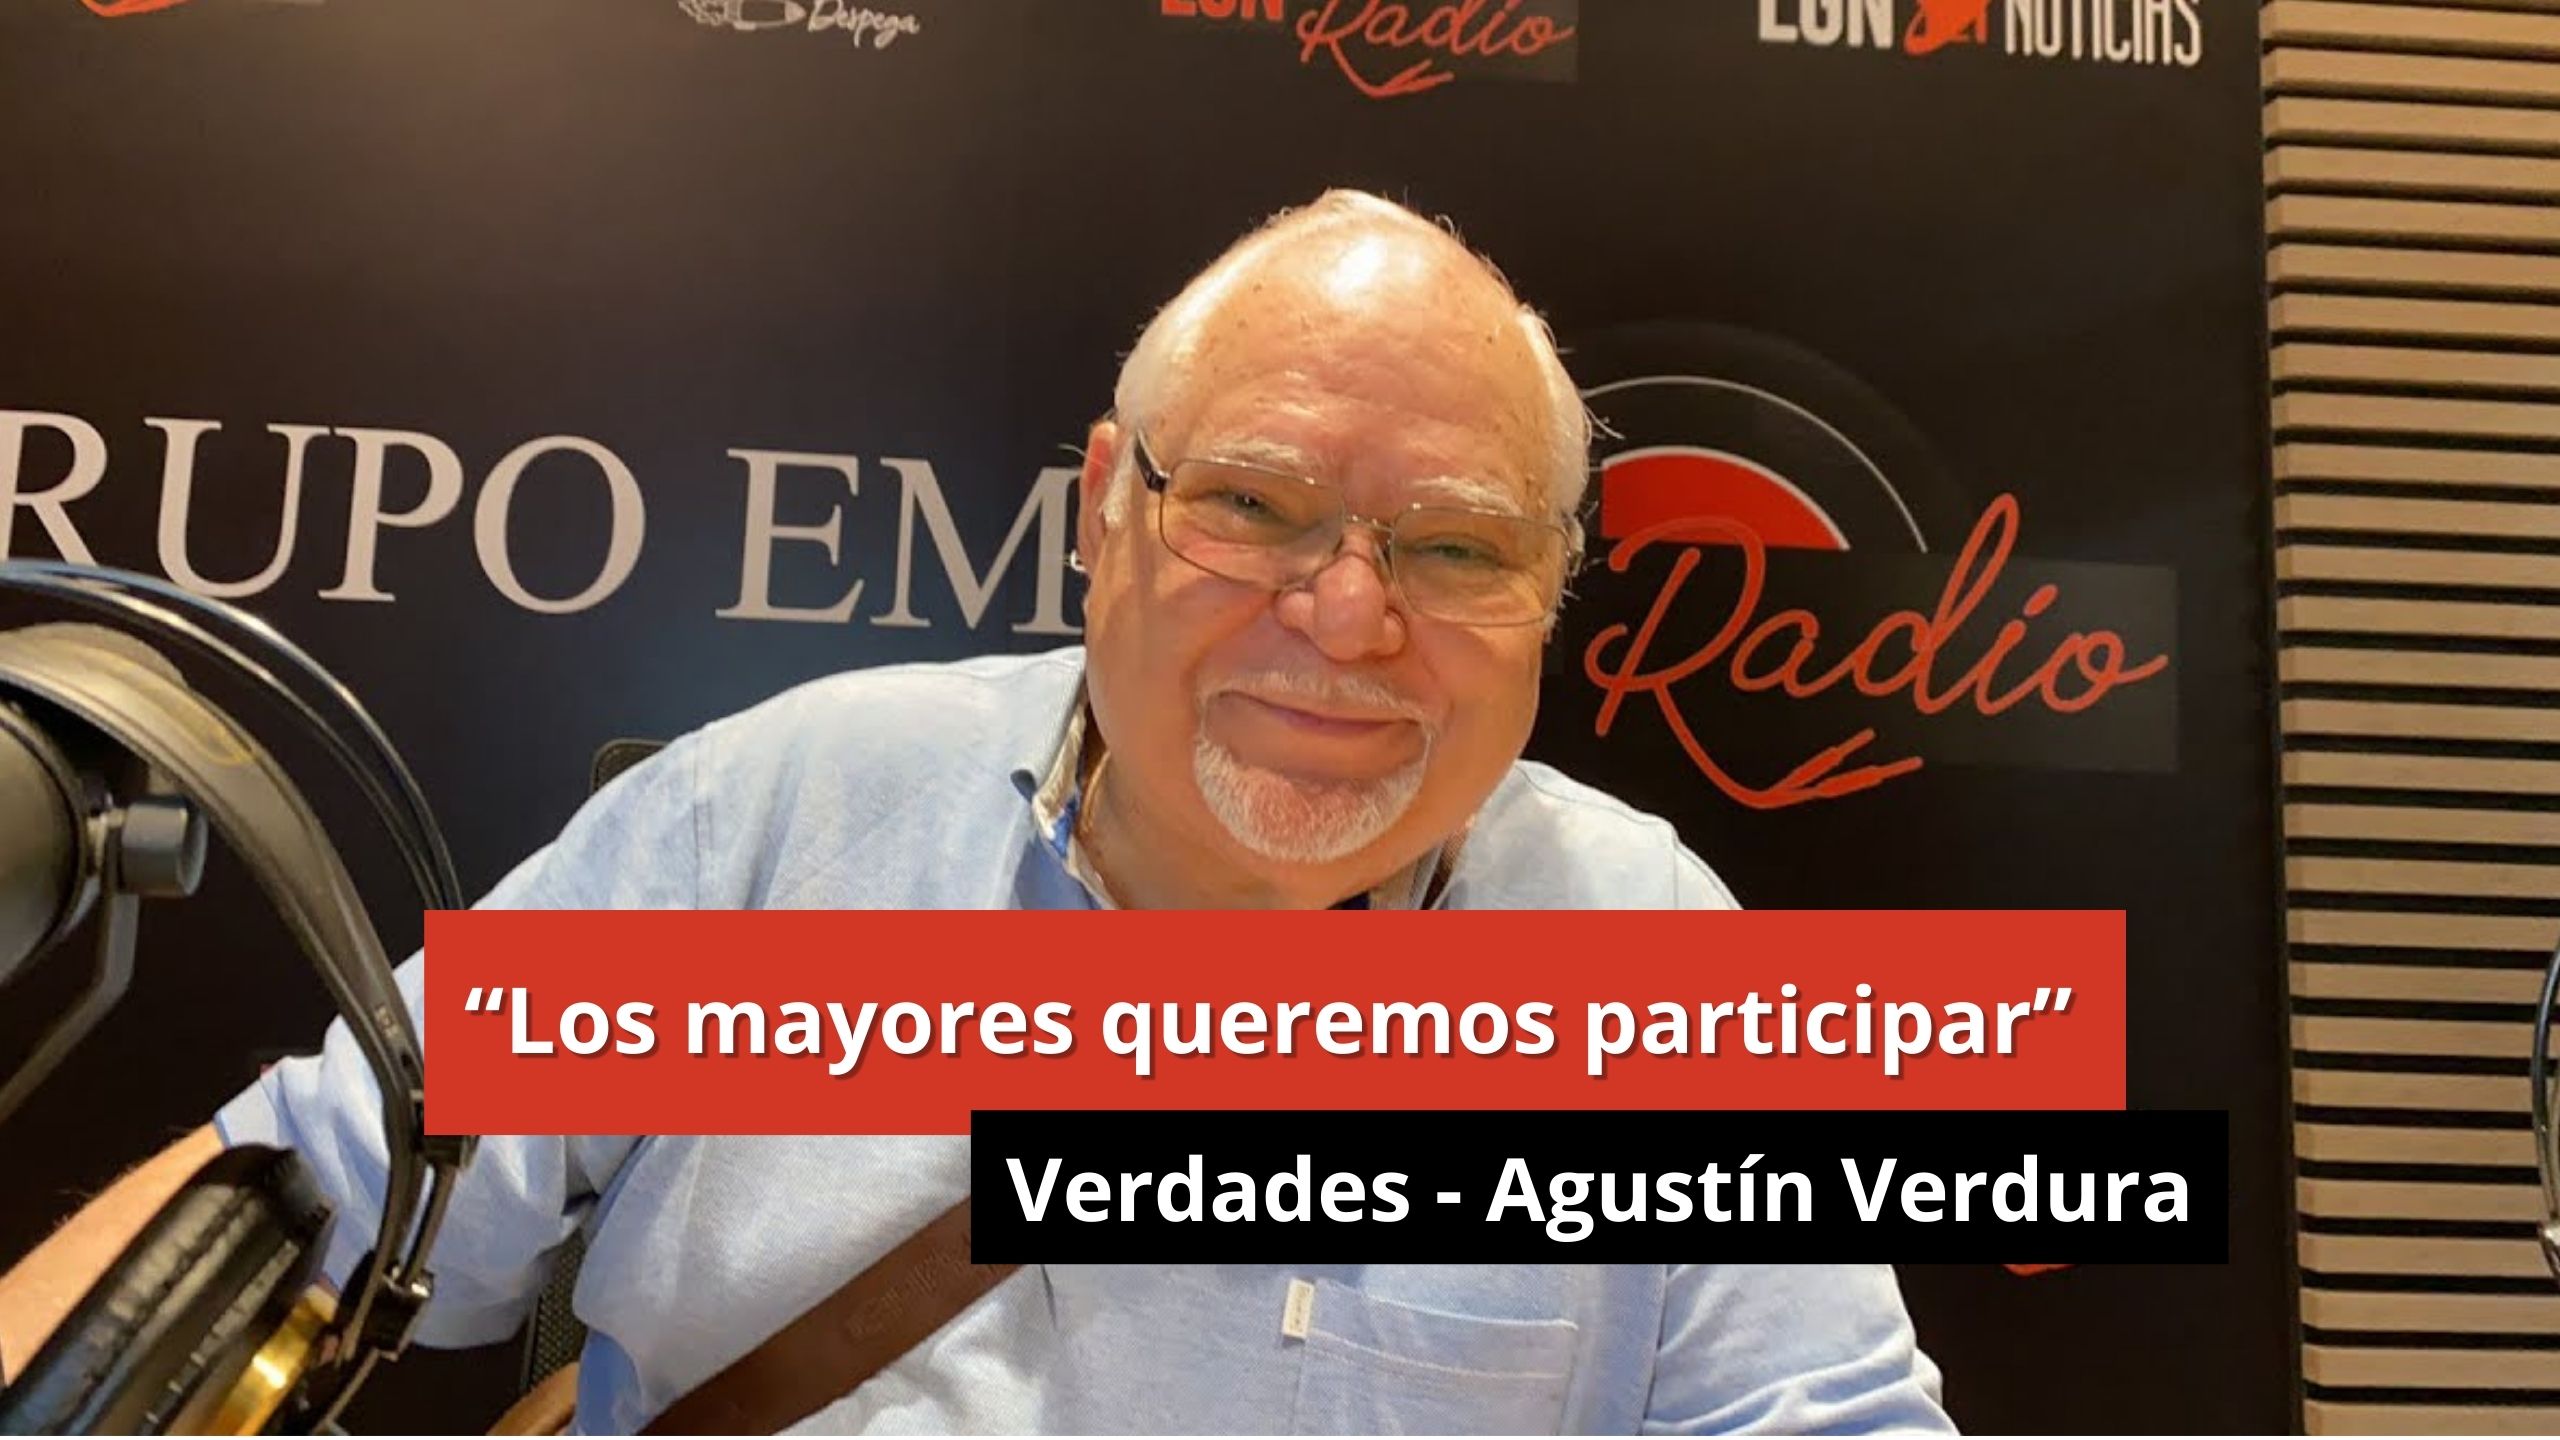 09-01-24 "Los mayores queremos participar" - Verdades - Agustin Verdura